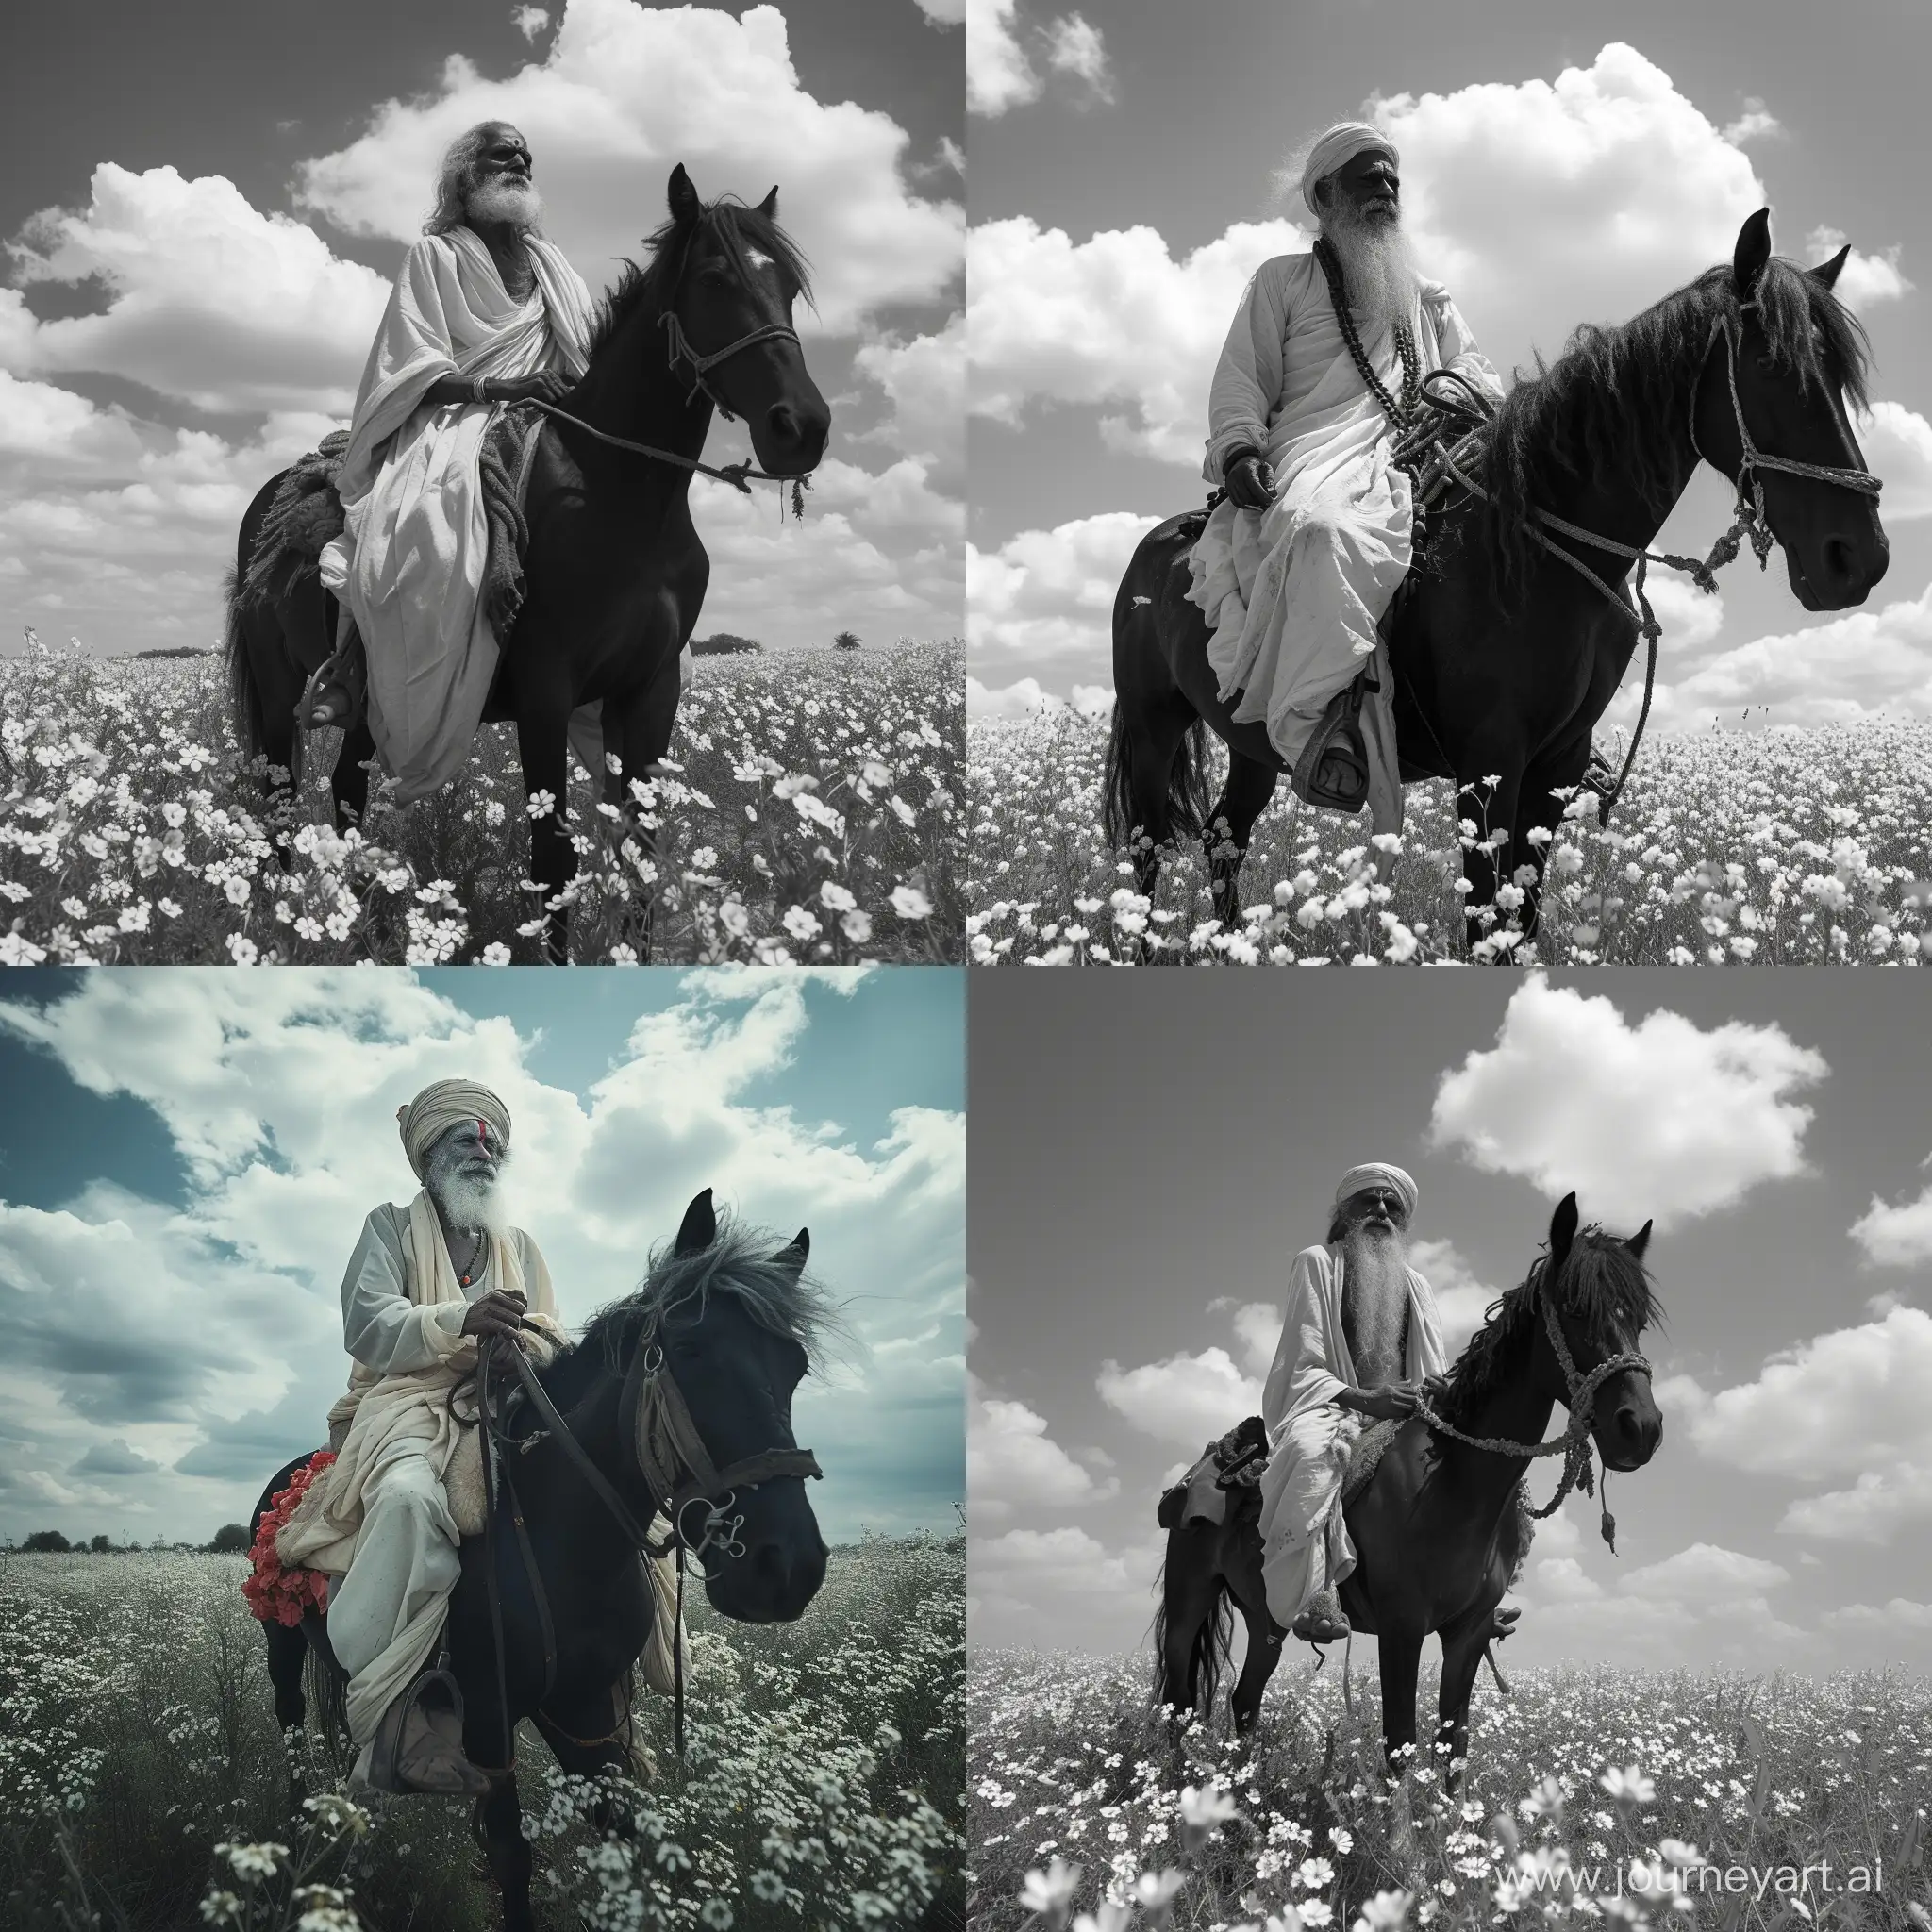 Elderly-Indian-Sadhu-Riding-Black-Horse-in-White-Flower-Meadow-under-Blue-Sky